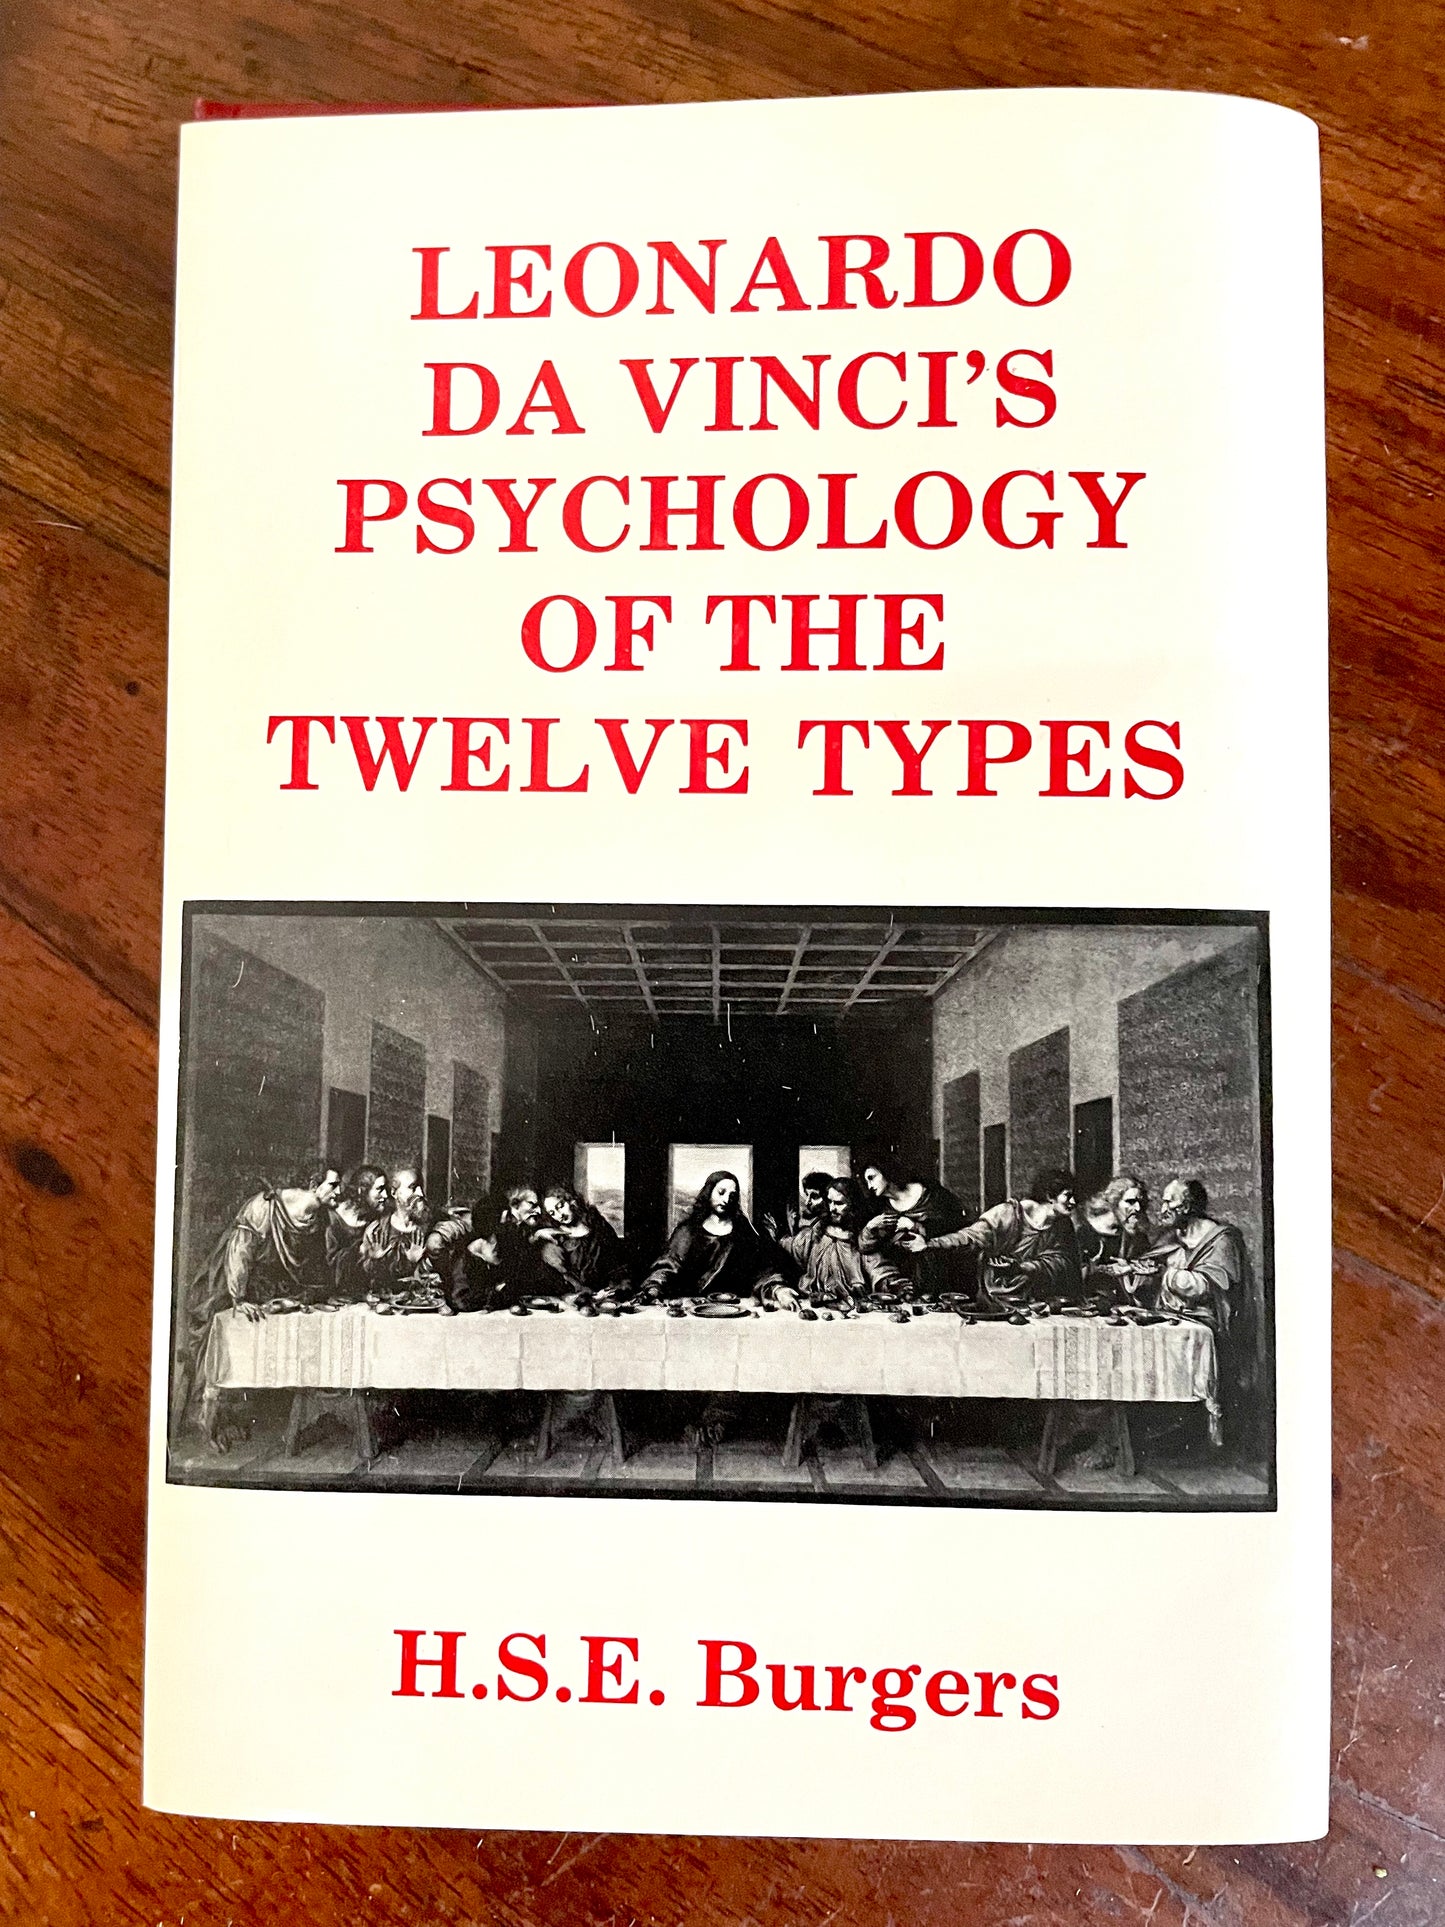 Leonardo Da Vinci's Psychology of the Twelve Types by H.S.E. Burgers